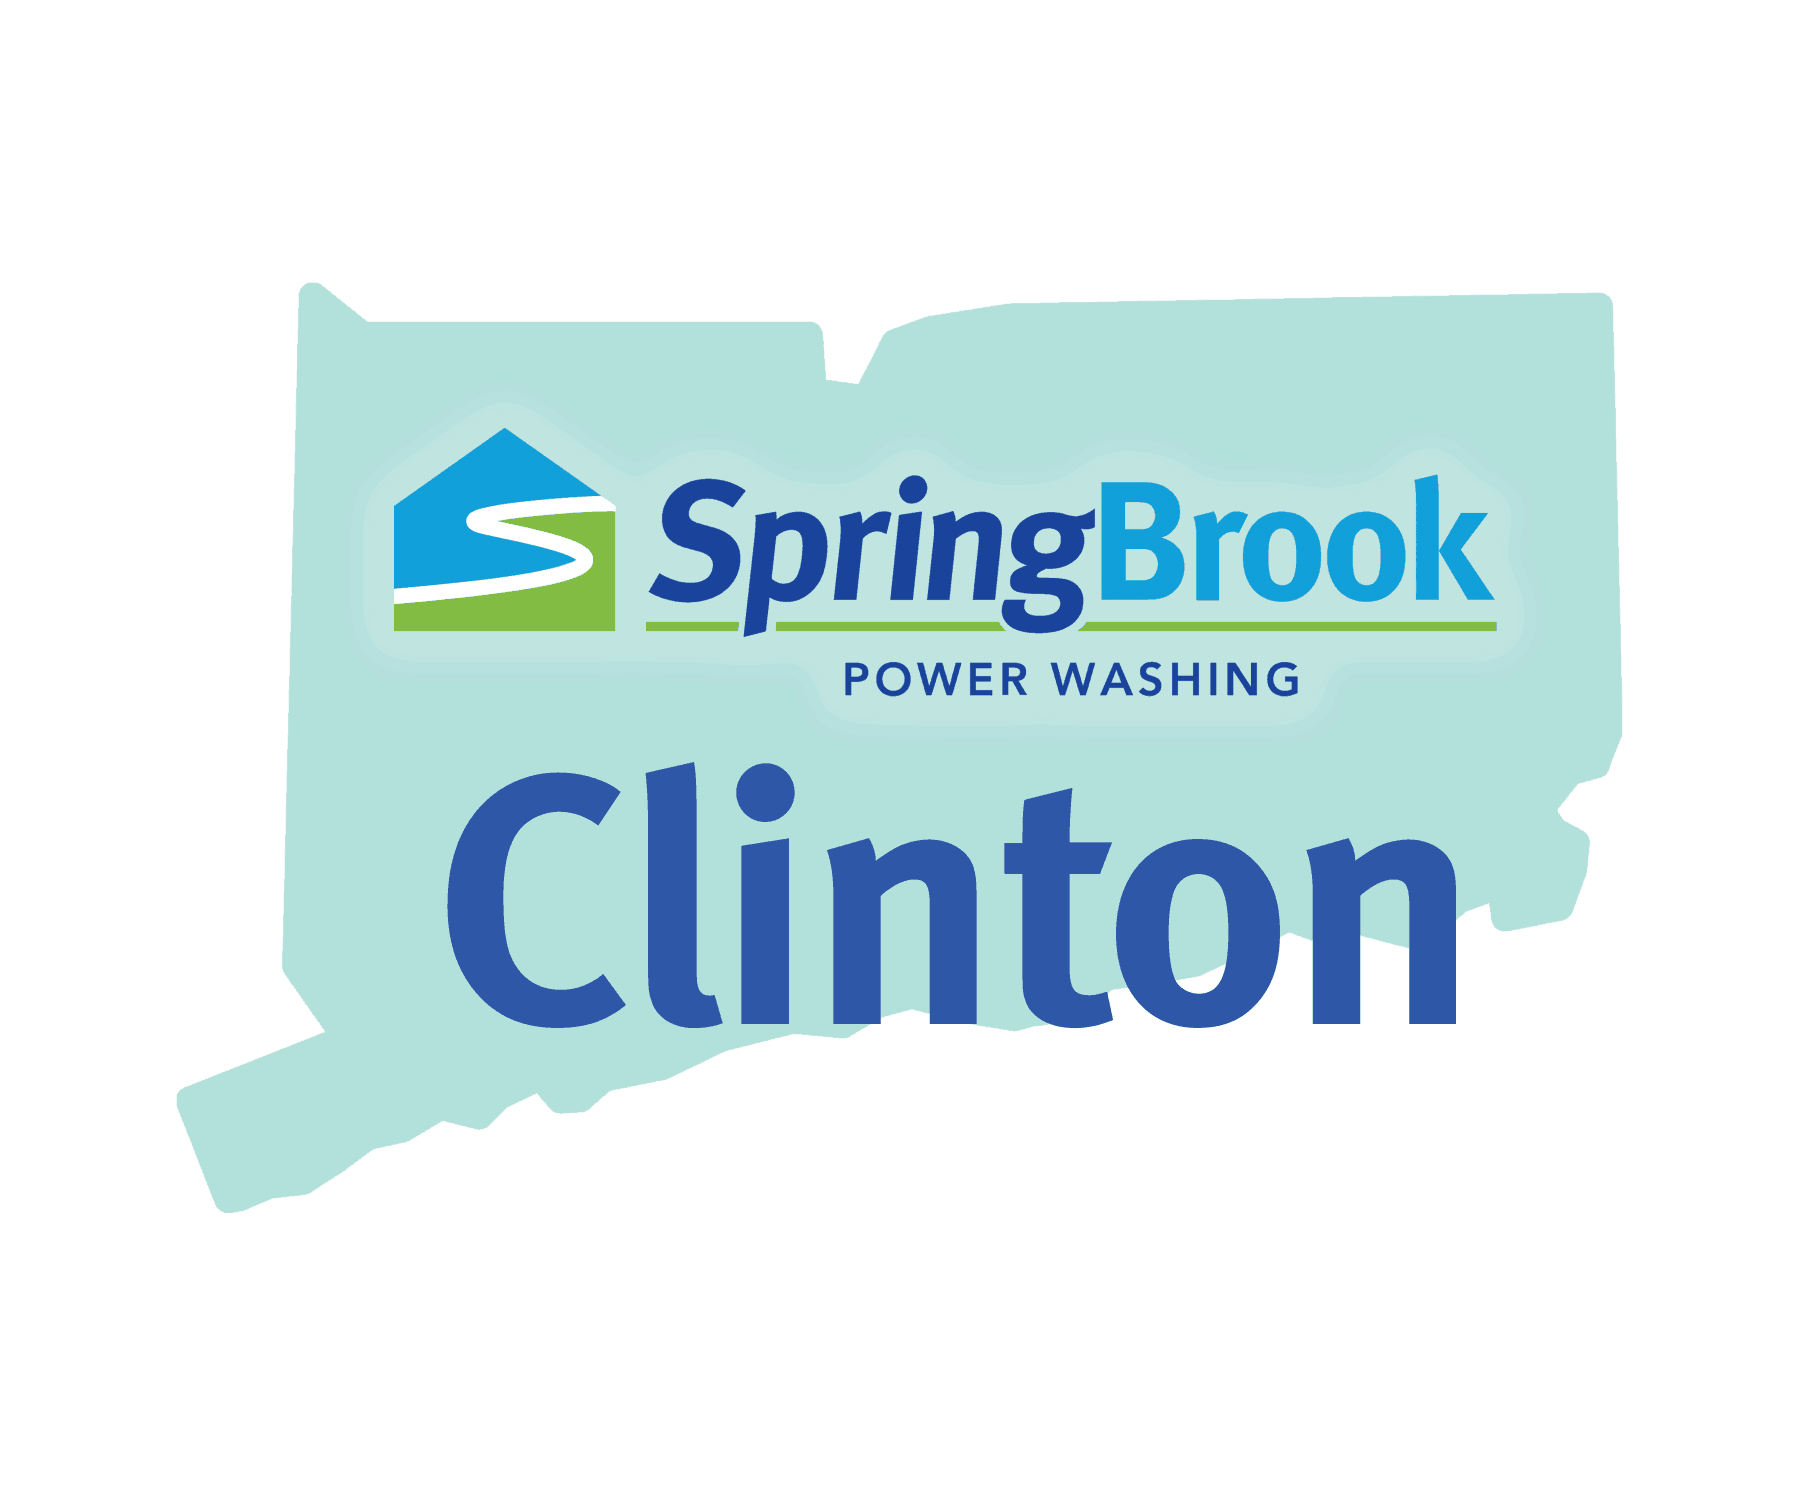 Springbrook Power Washing Clinton Connecticut